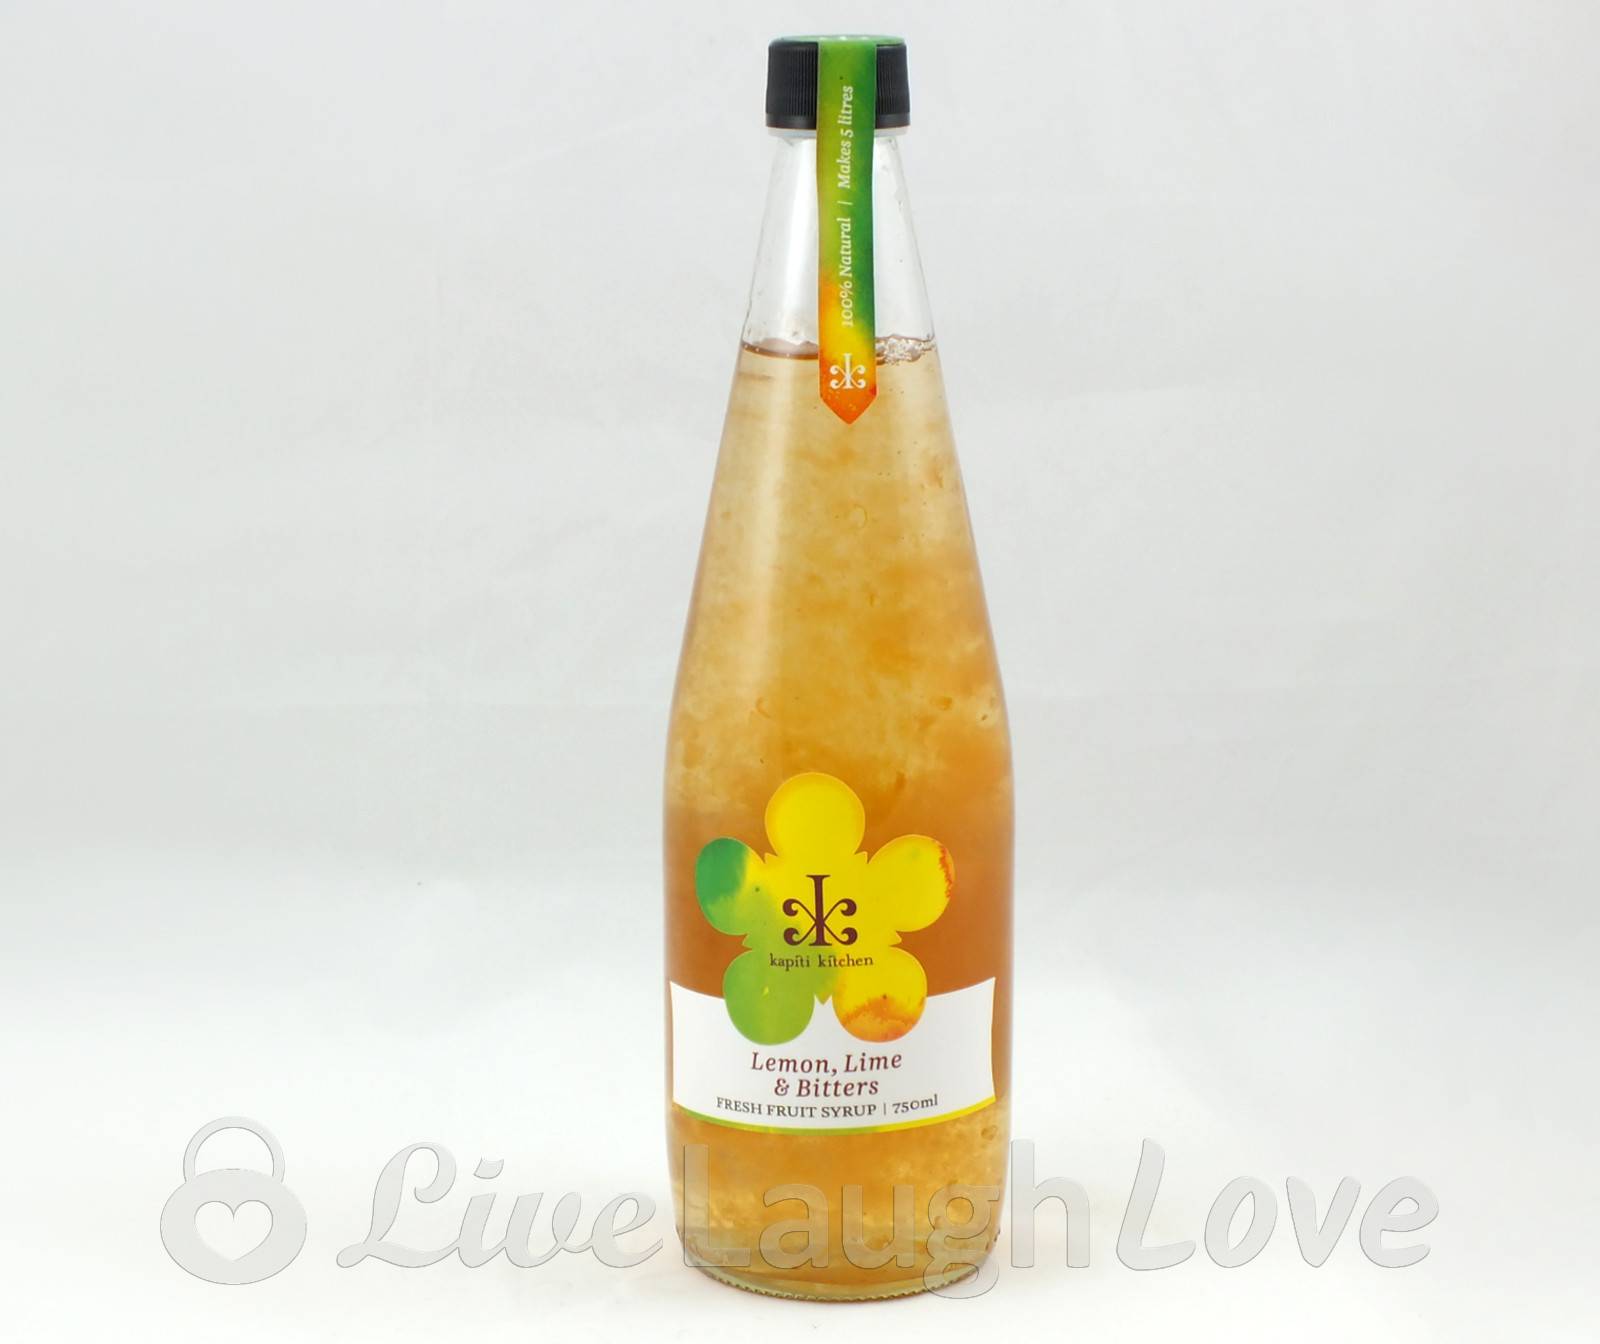 Kapiti-Kitchen-Lemon-Lime-Bitter-Fruit-Syrup-750ml